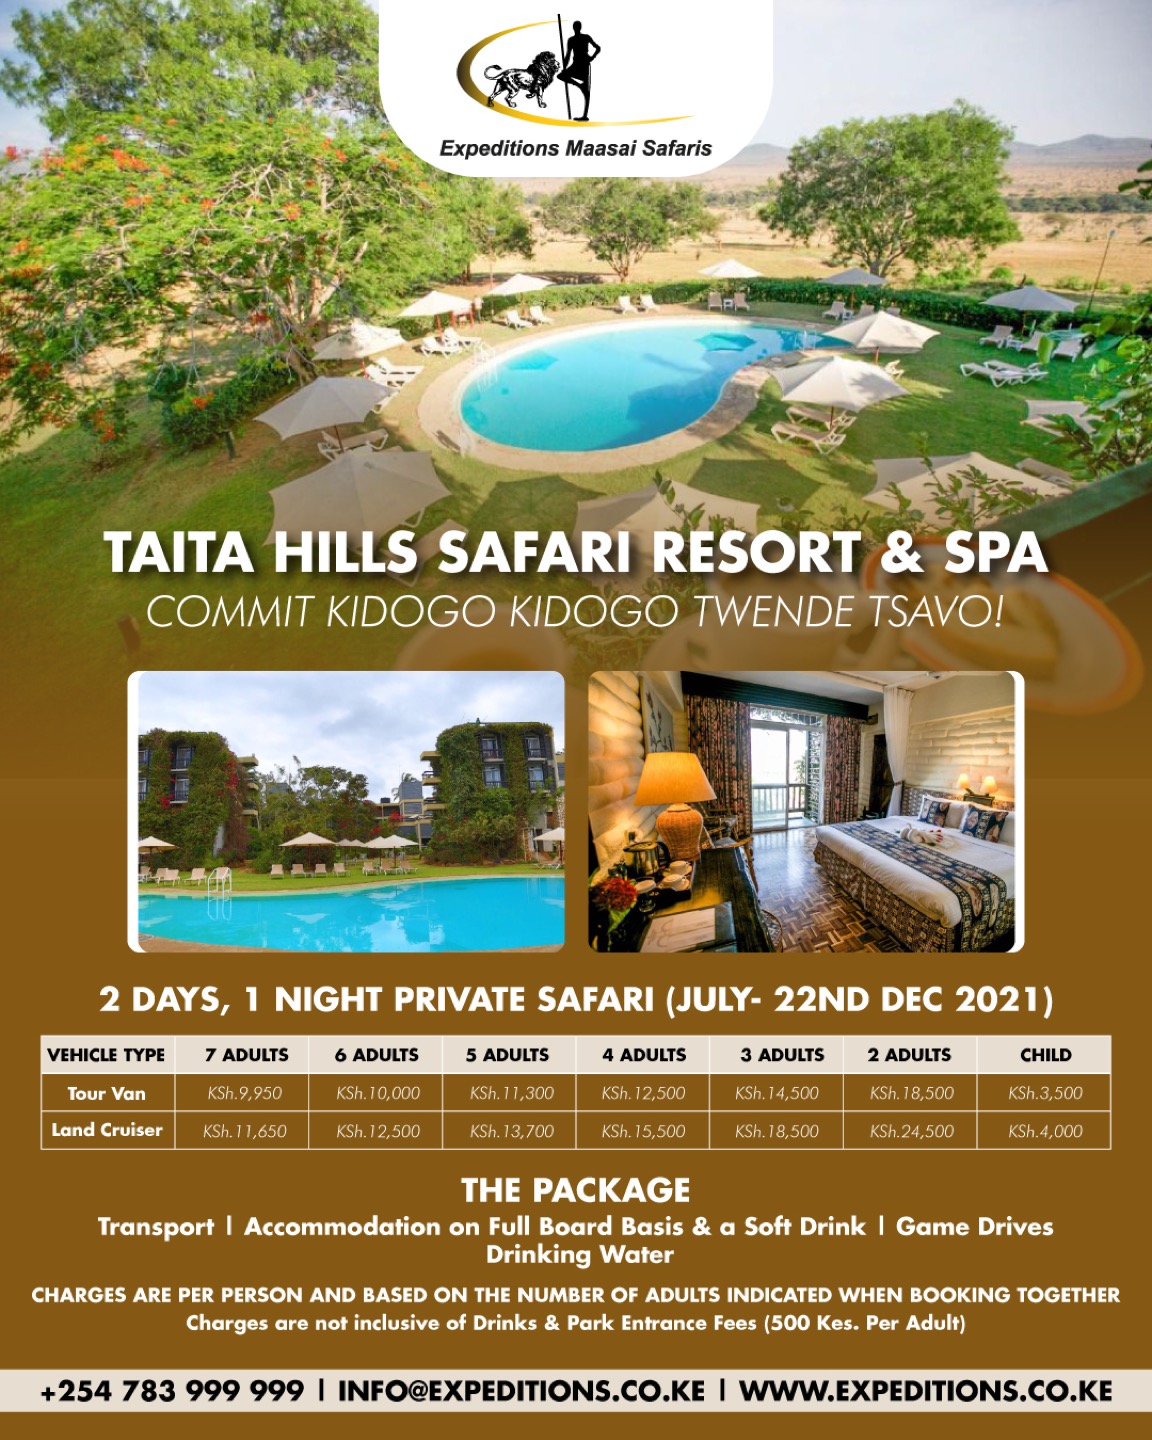 Enjoy a 2 Days, 1 Night Safari to Tsavo with our offers for Taita Hills Safari Resort & Spa